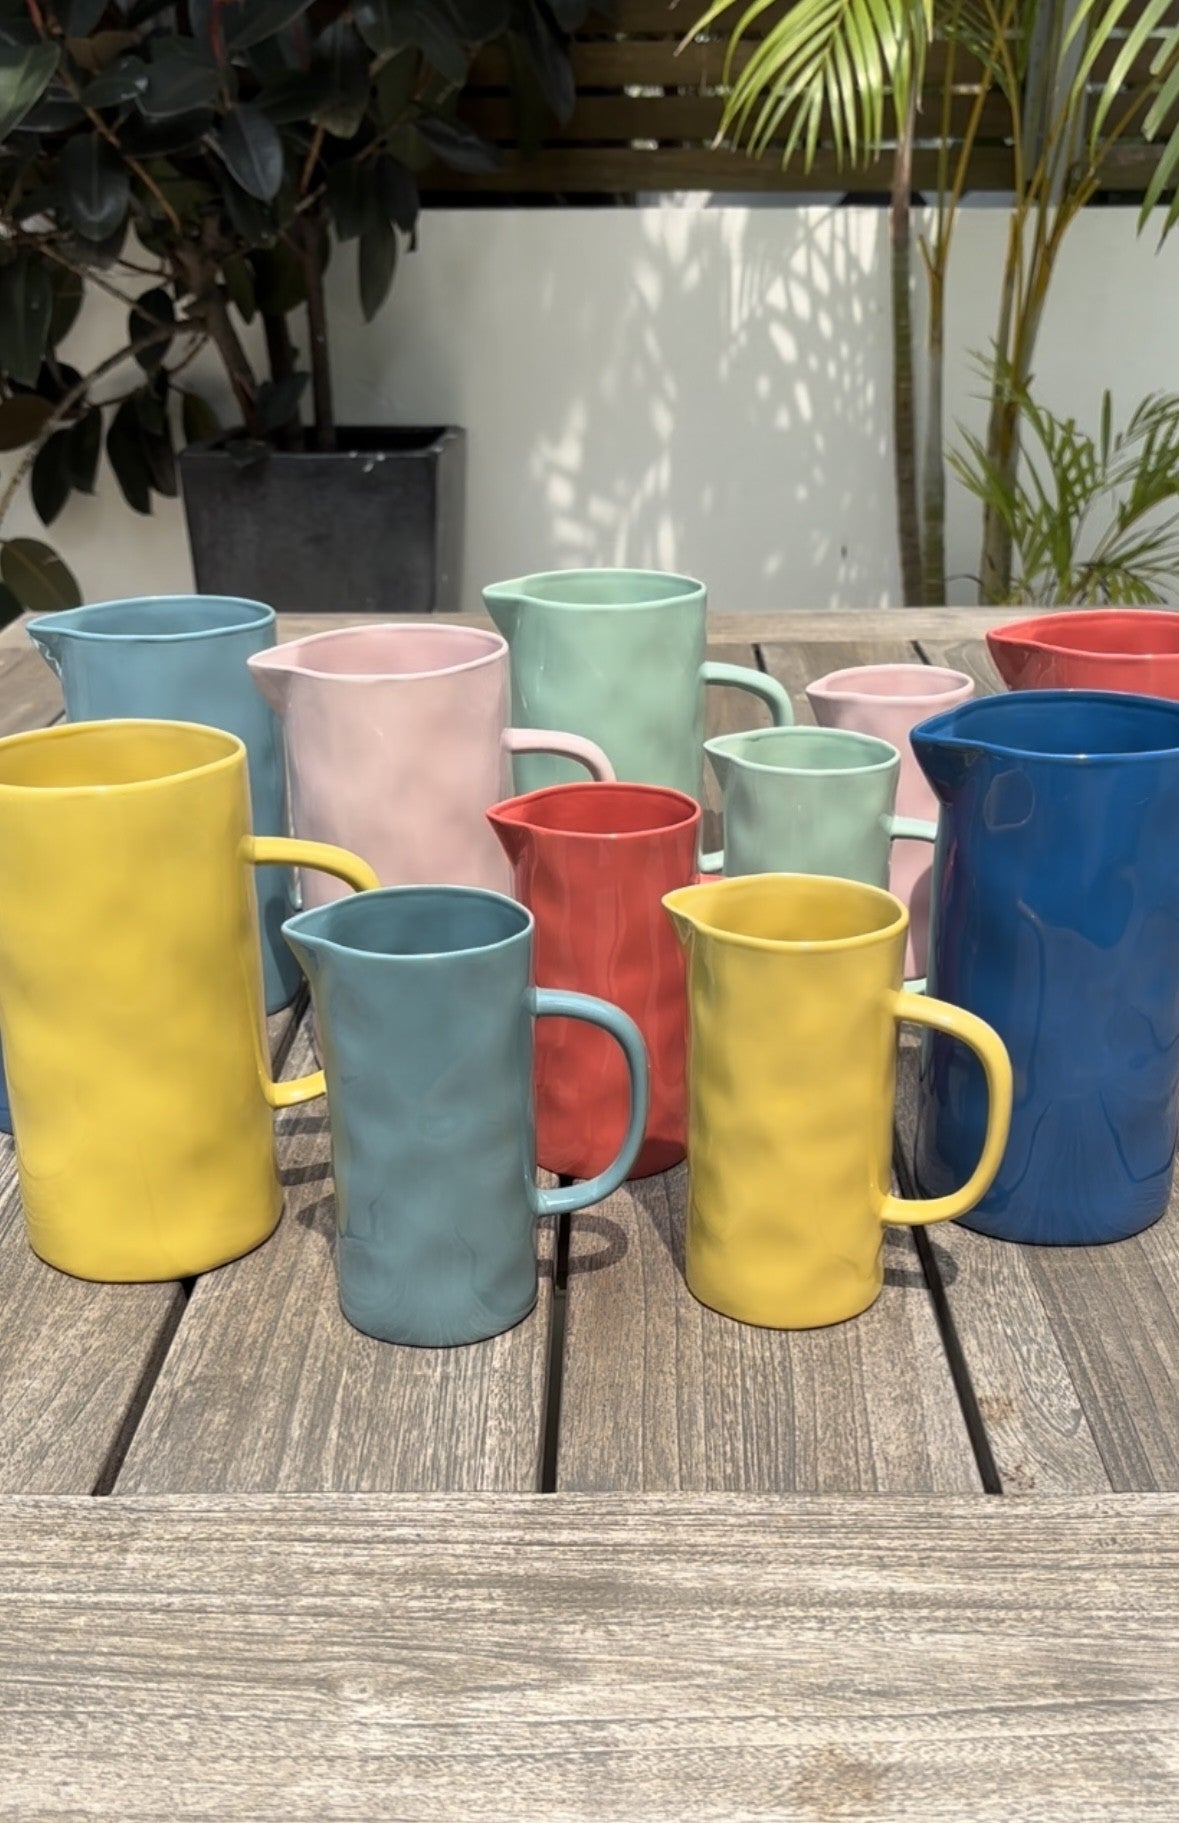 A selection of colourful handmade jugs